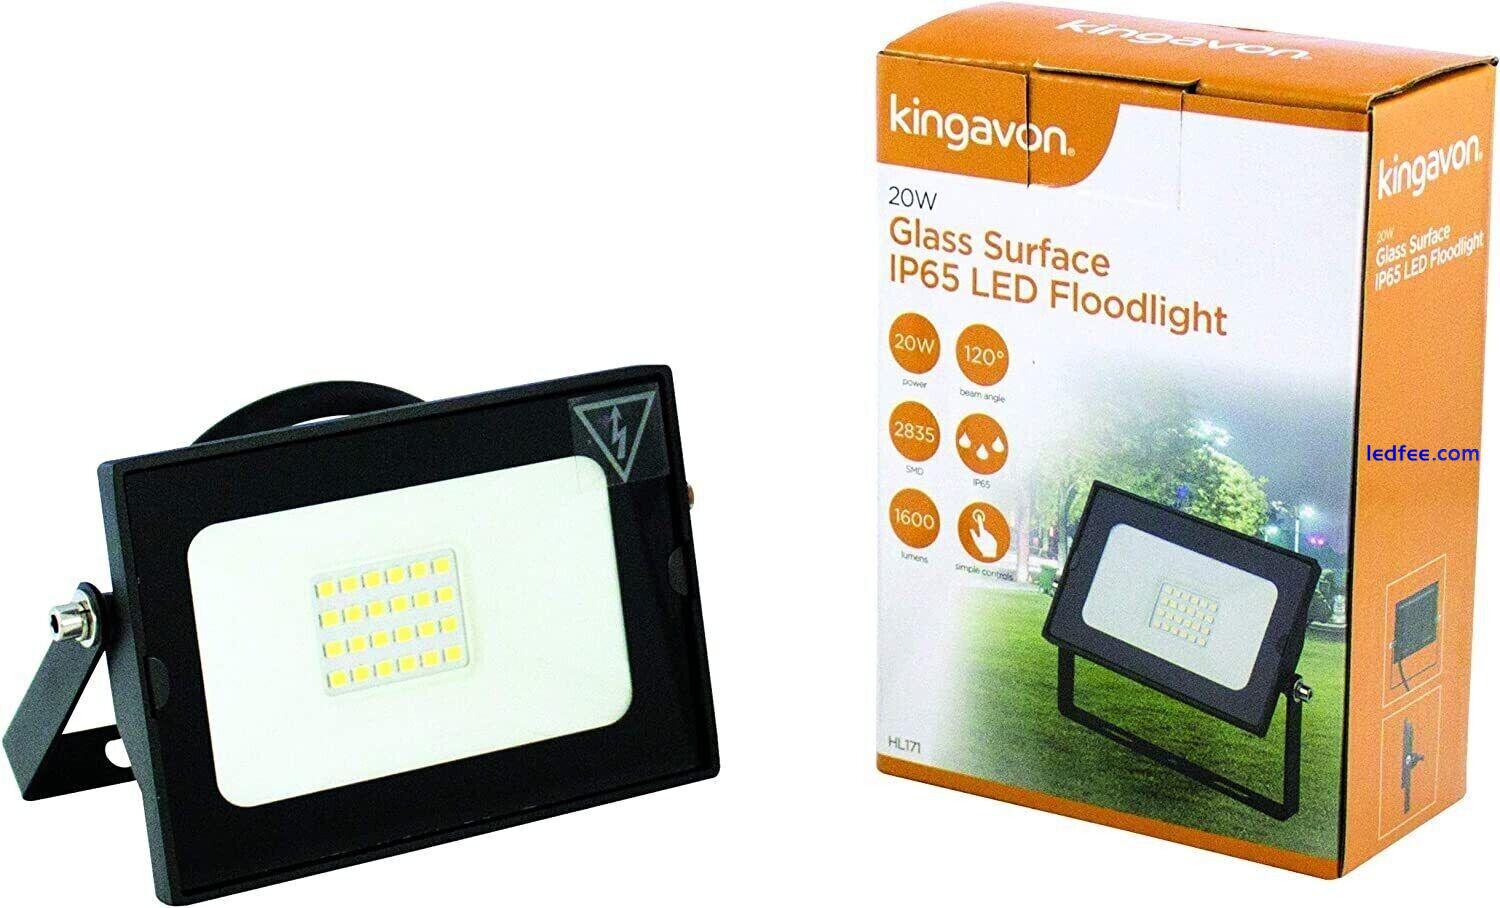 20W IP65 LED Floodlight PIR Motion Without Sensor Security Flood Light Garden UK 1 